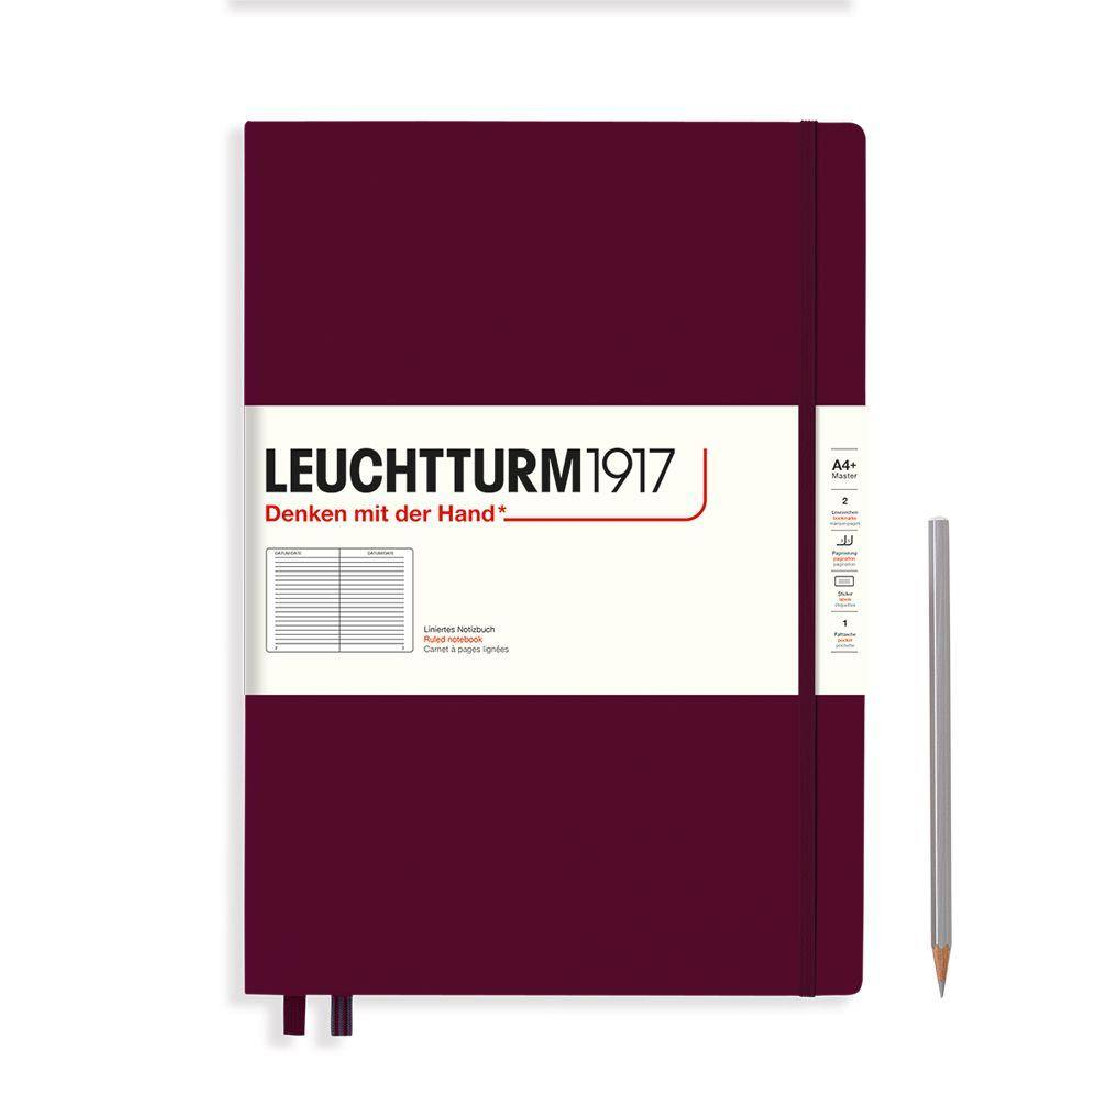 Leuchtturm 1917 Notebook A4 plus Burgundy Ruled Hard Cover